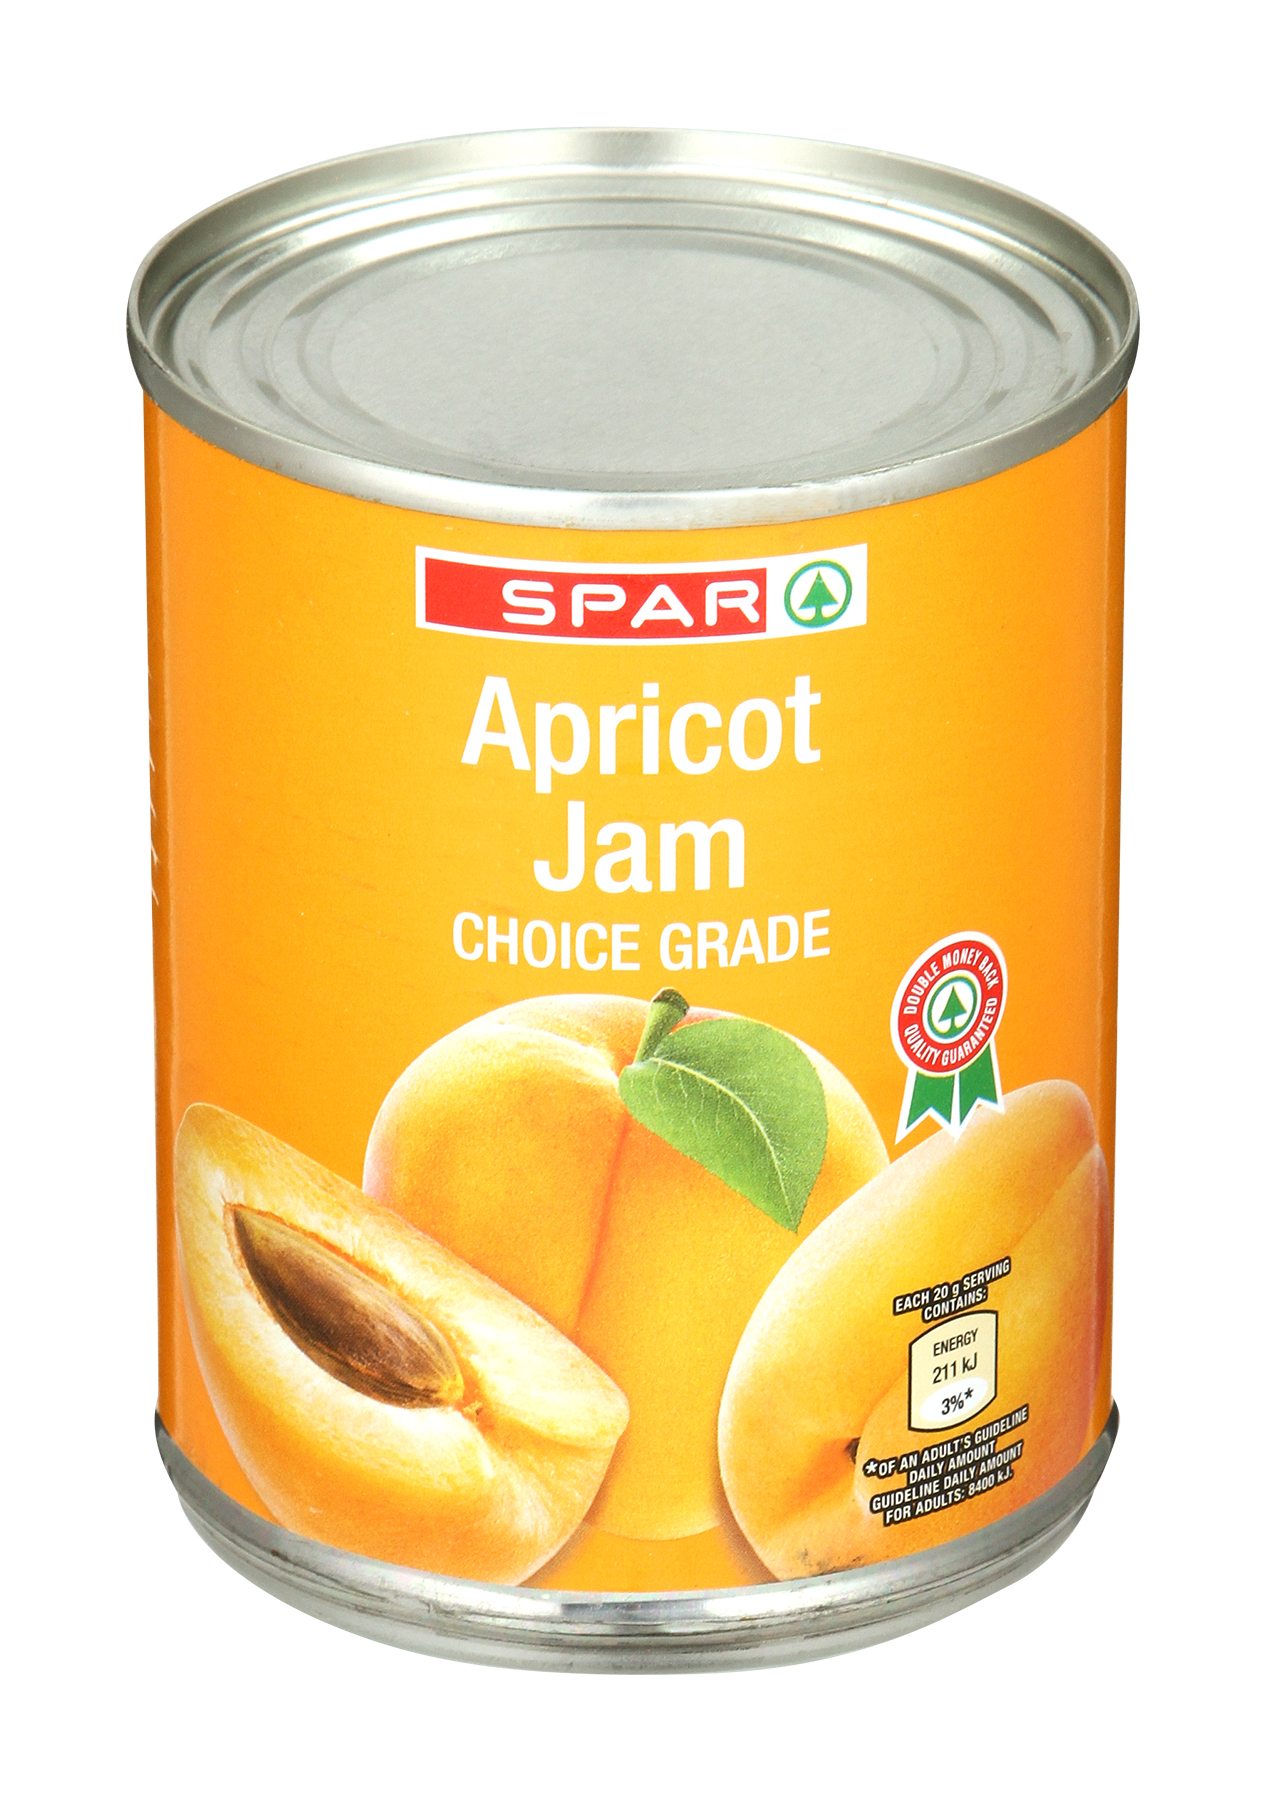 jam - smooth apricot